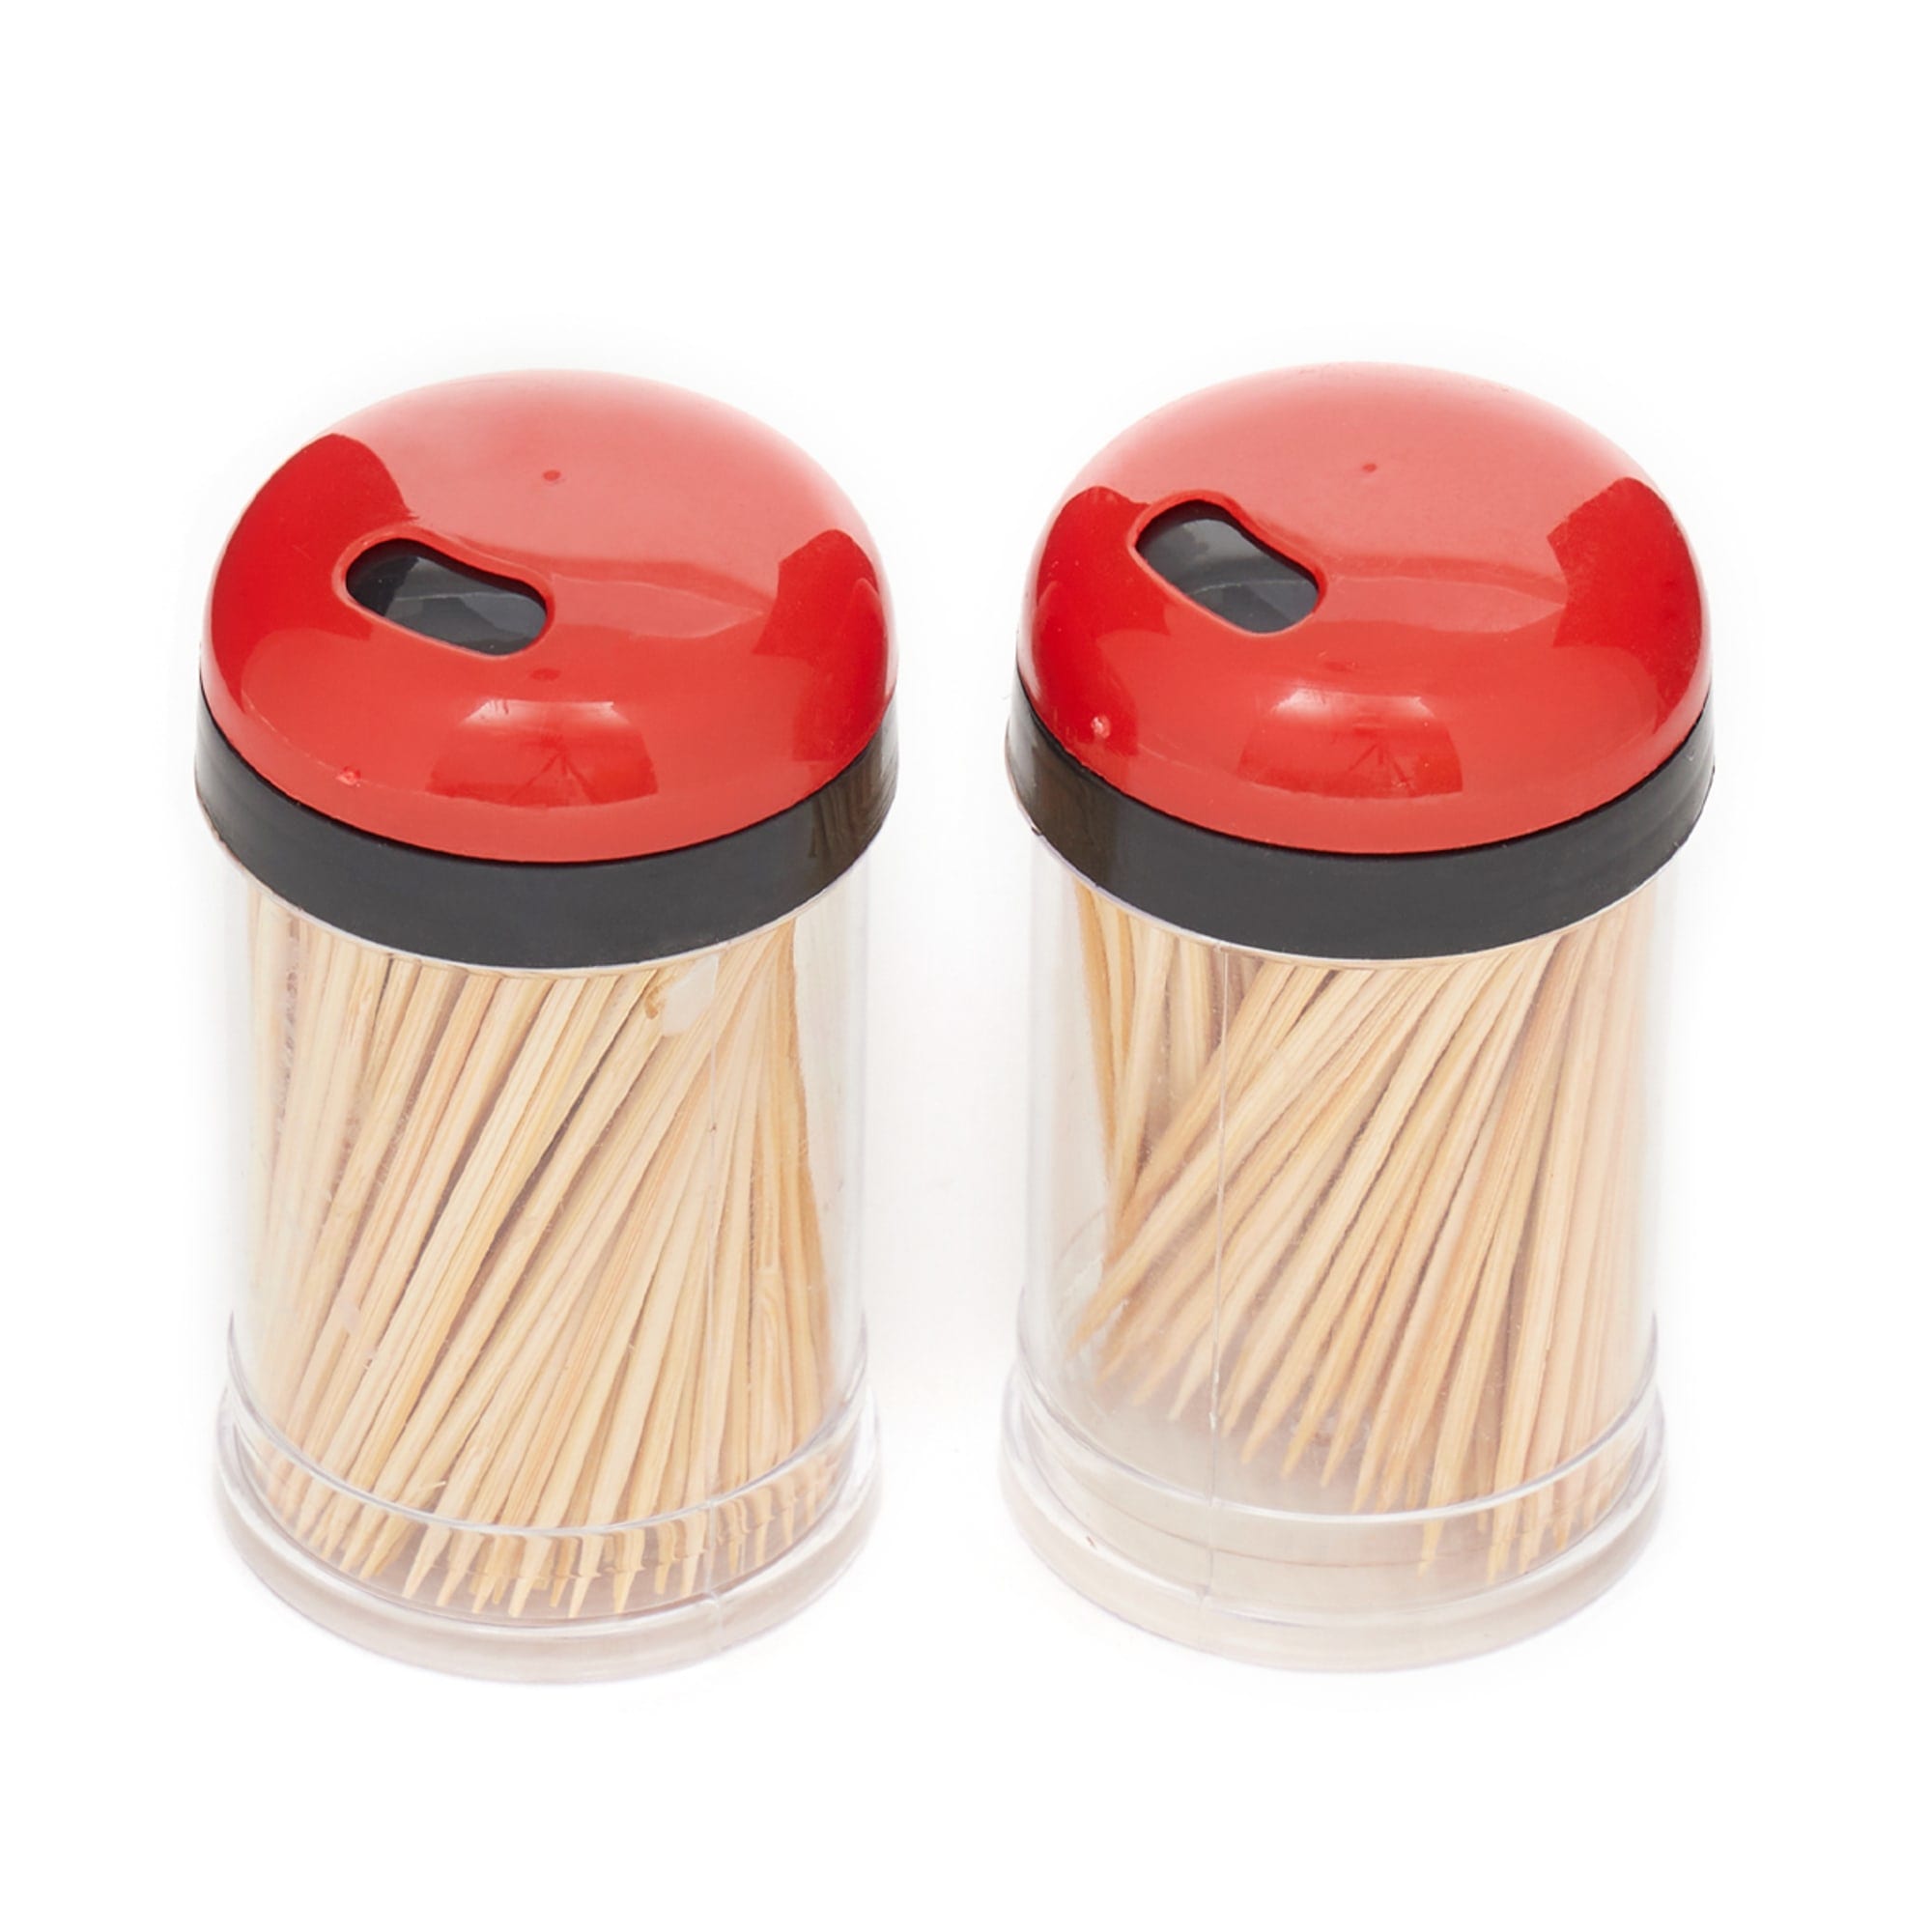 Baker’s Secret 340-Piece Bamboo Toothpicks with Set of 2 Bottles $3.00 EACH, CASE PACK OF 72